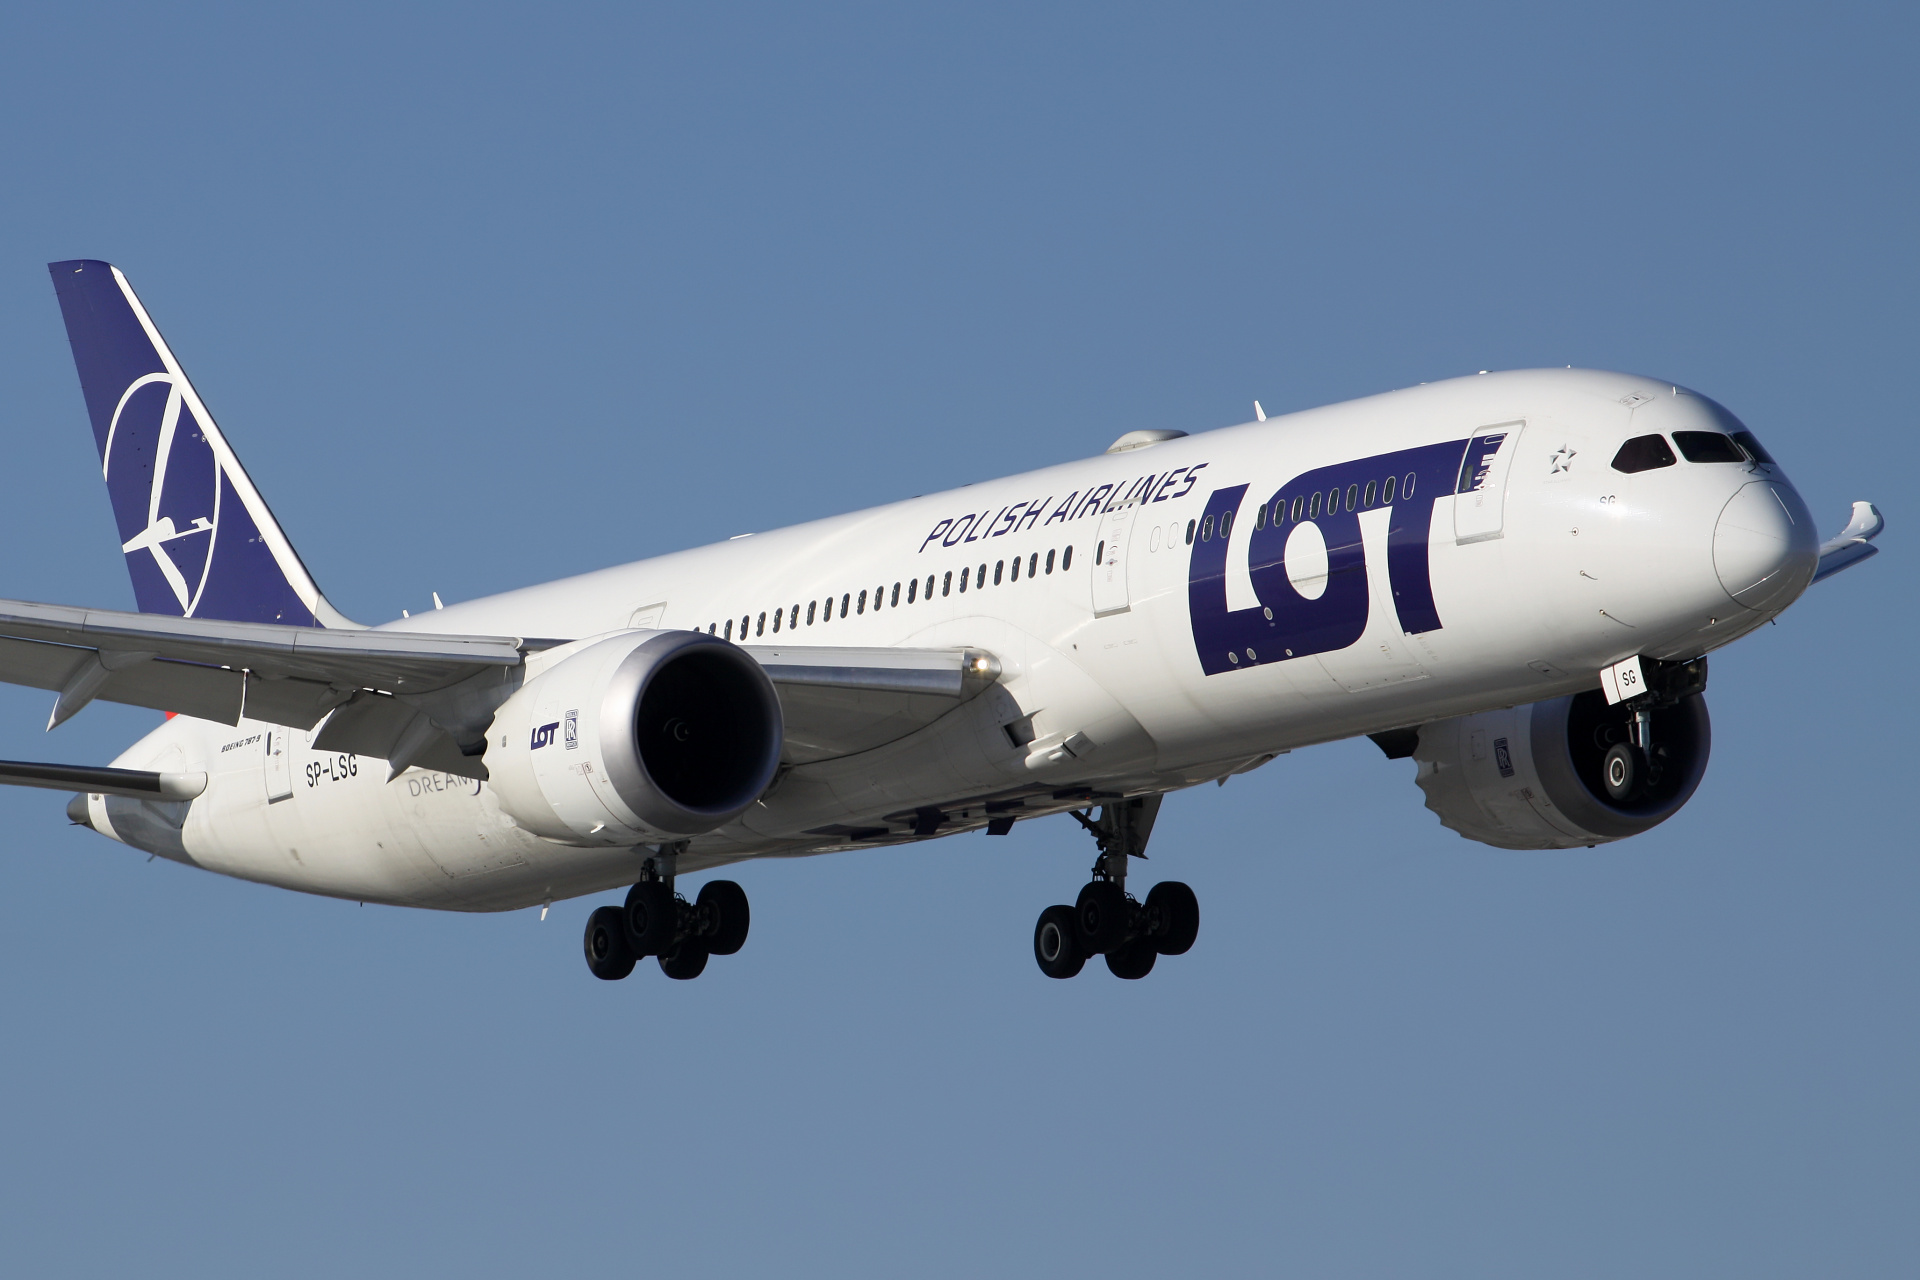 SP-LSG (Aircraft » EPWA Spotting » Boeing 787-9 Dreamliner » LOT Polish Airlines)